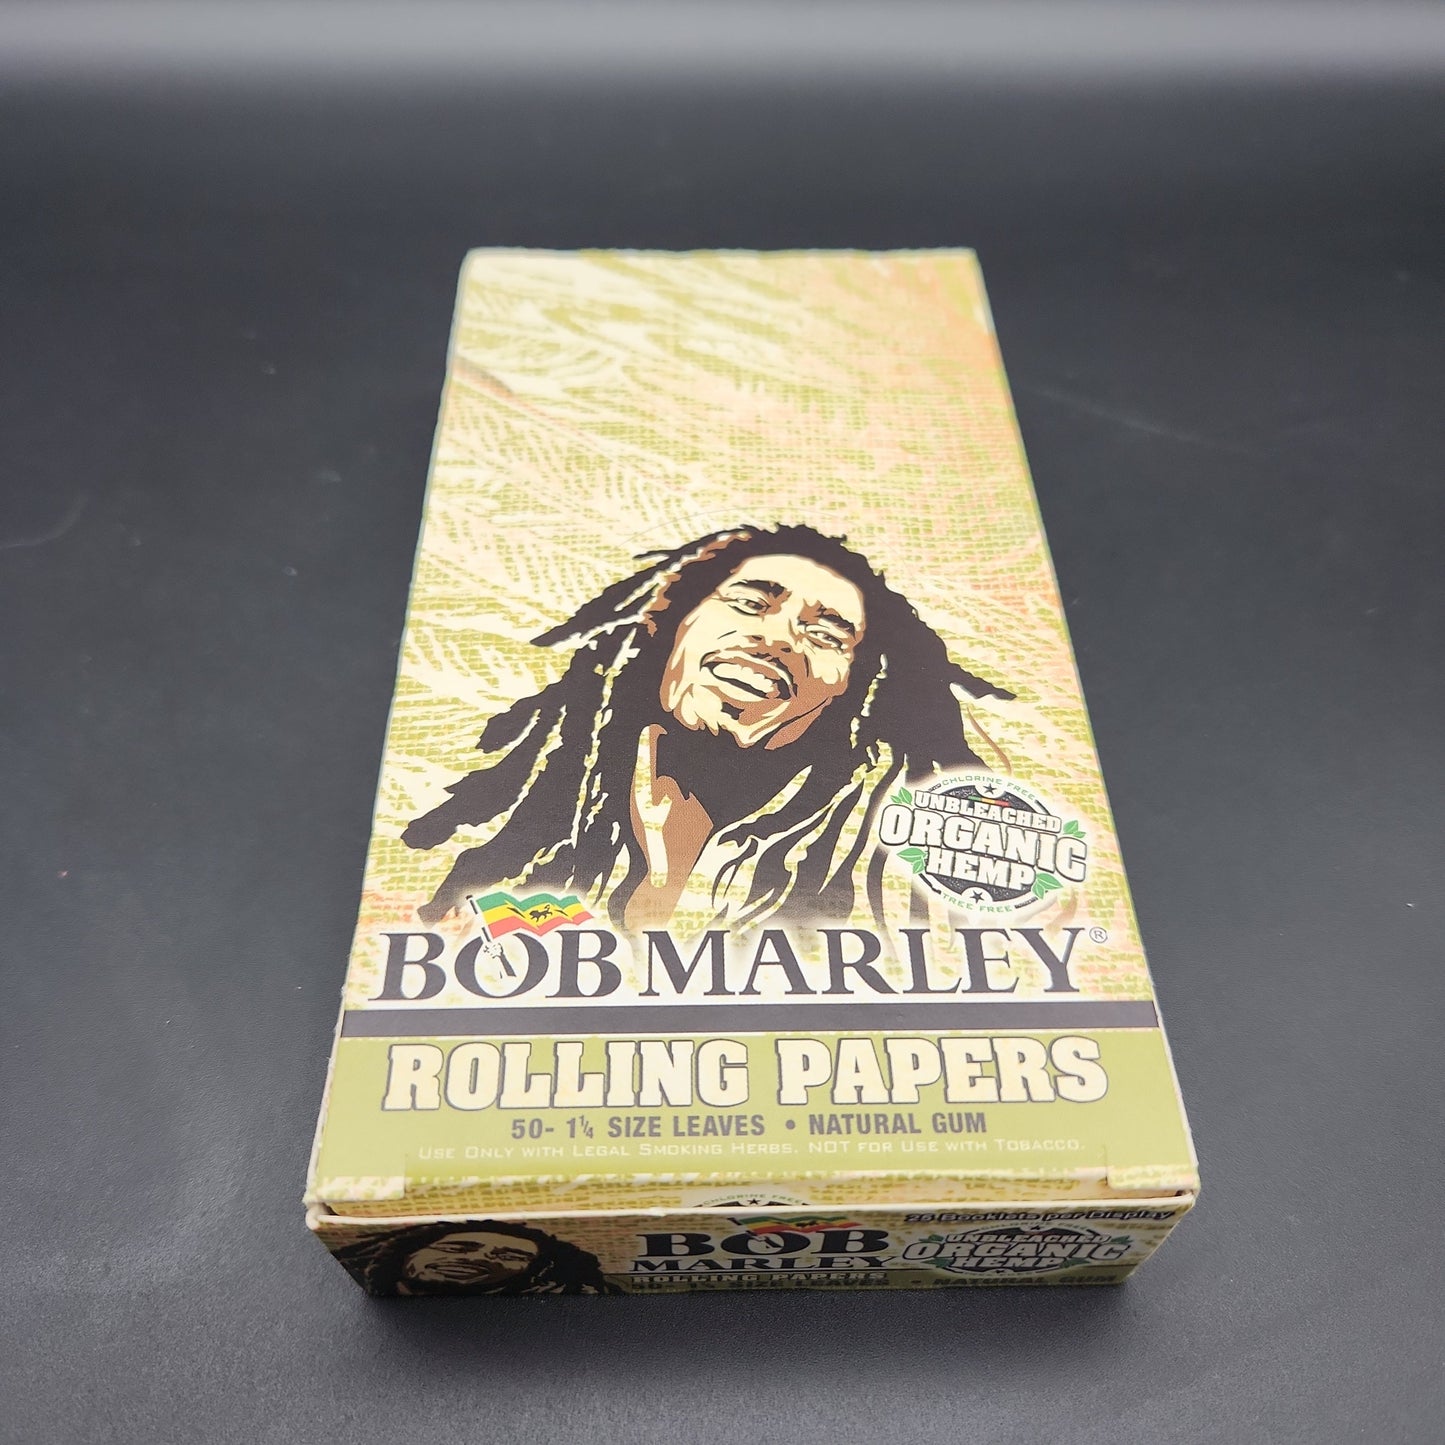 Bob Marley Rolling Papers Organic Hemp - 1-1/4" Box